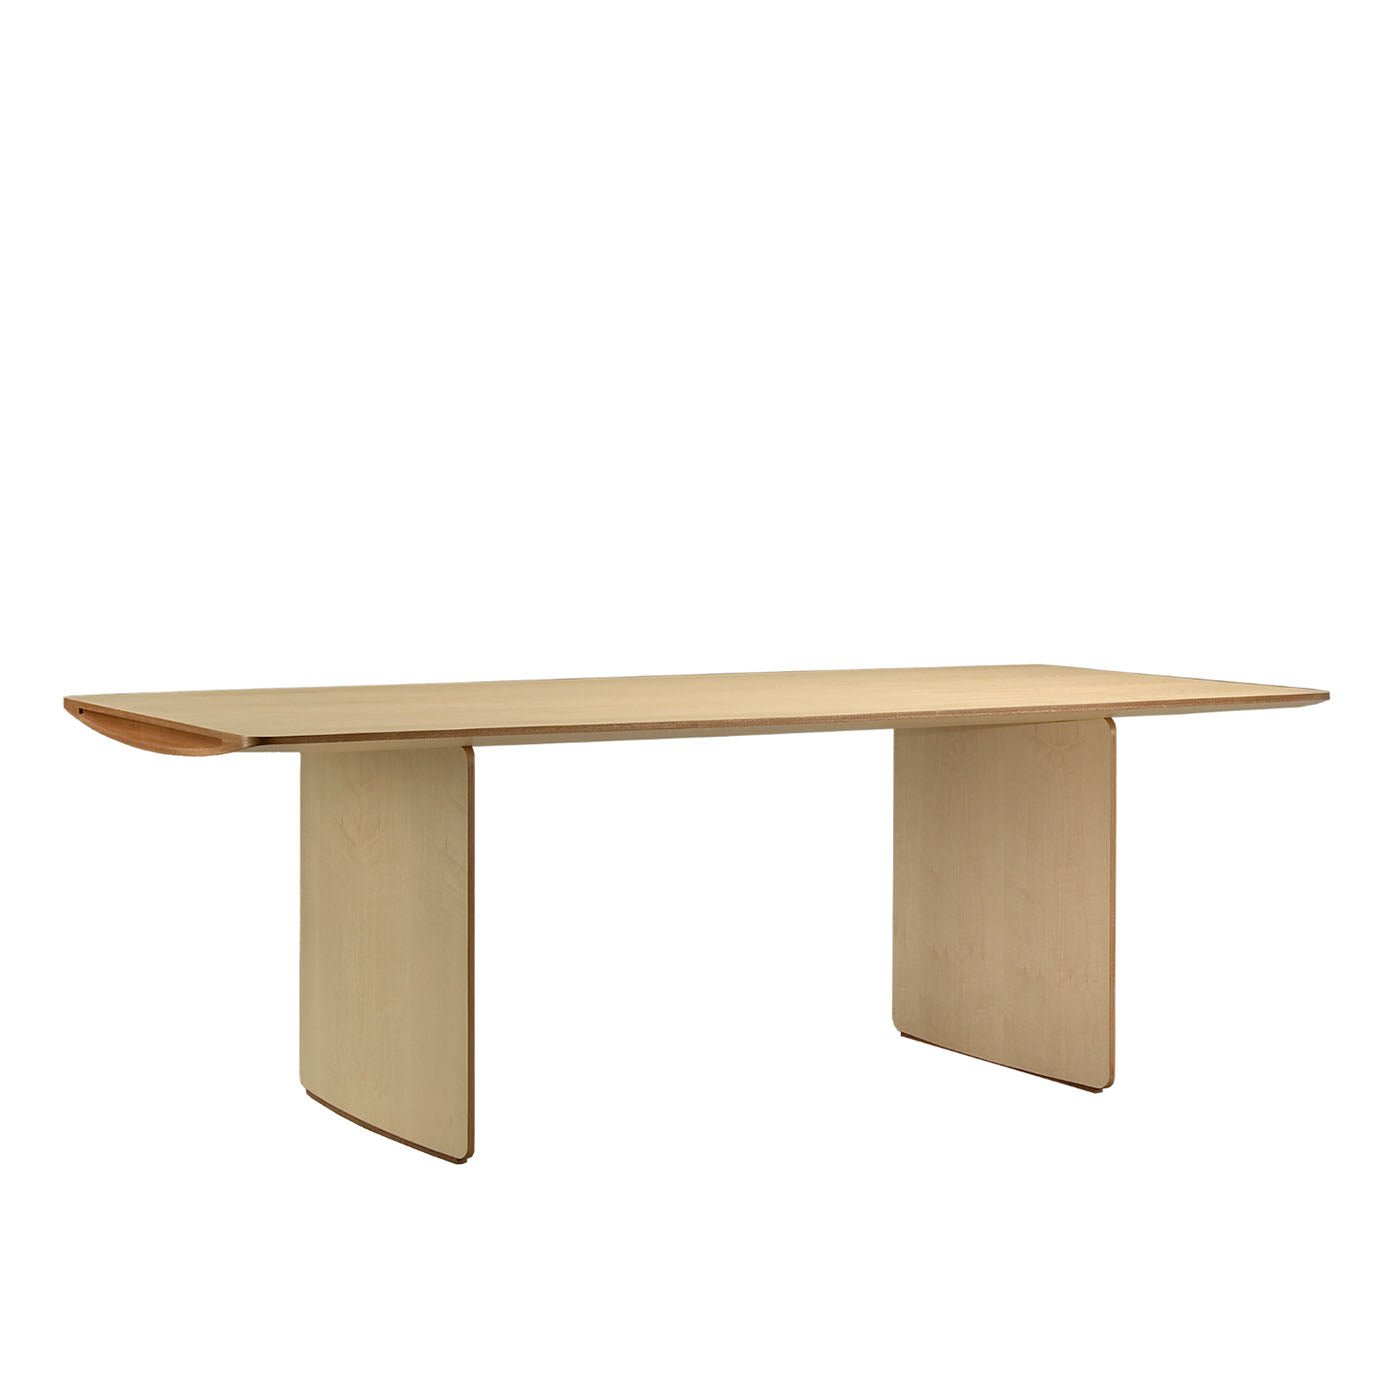 Aero Rectangular Maple Wood Table by Franco Poli - Alternative view 1